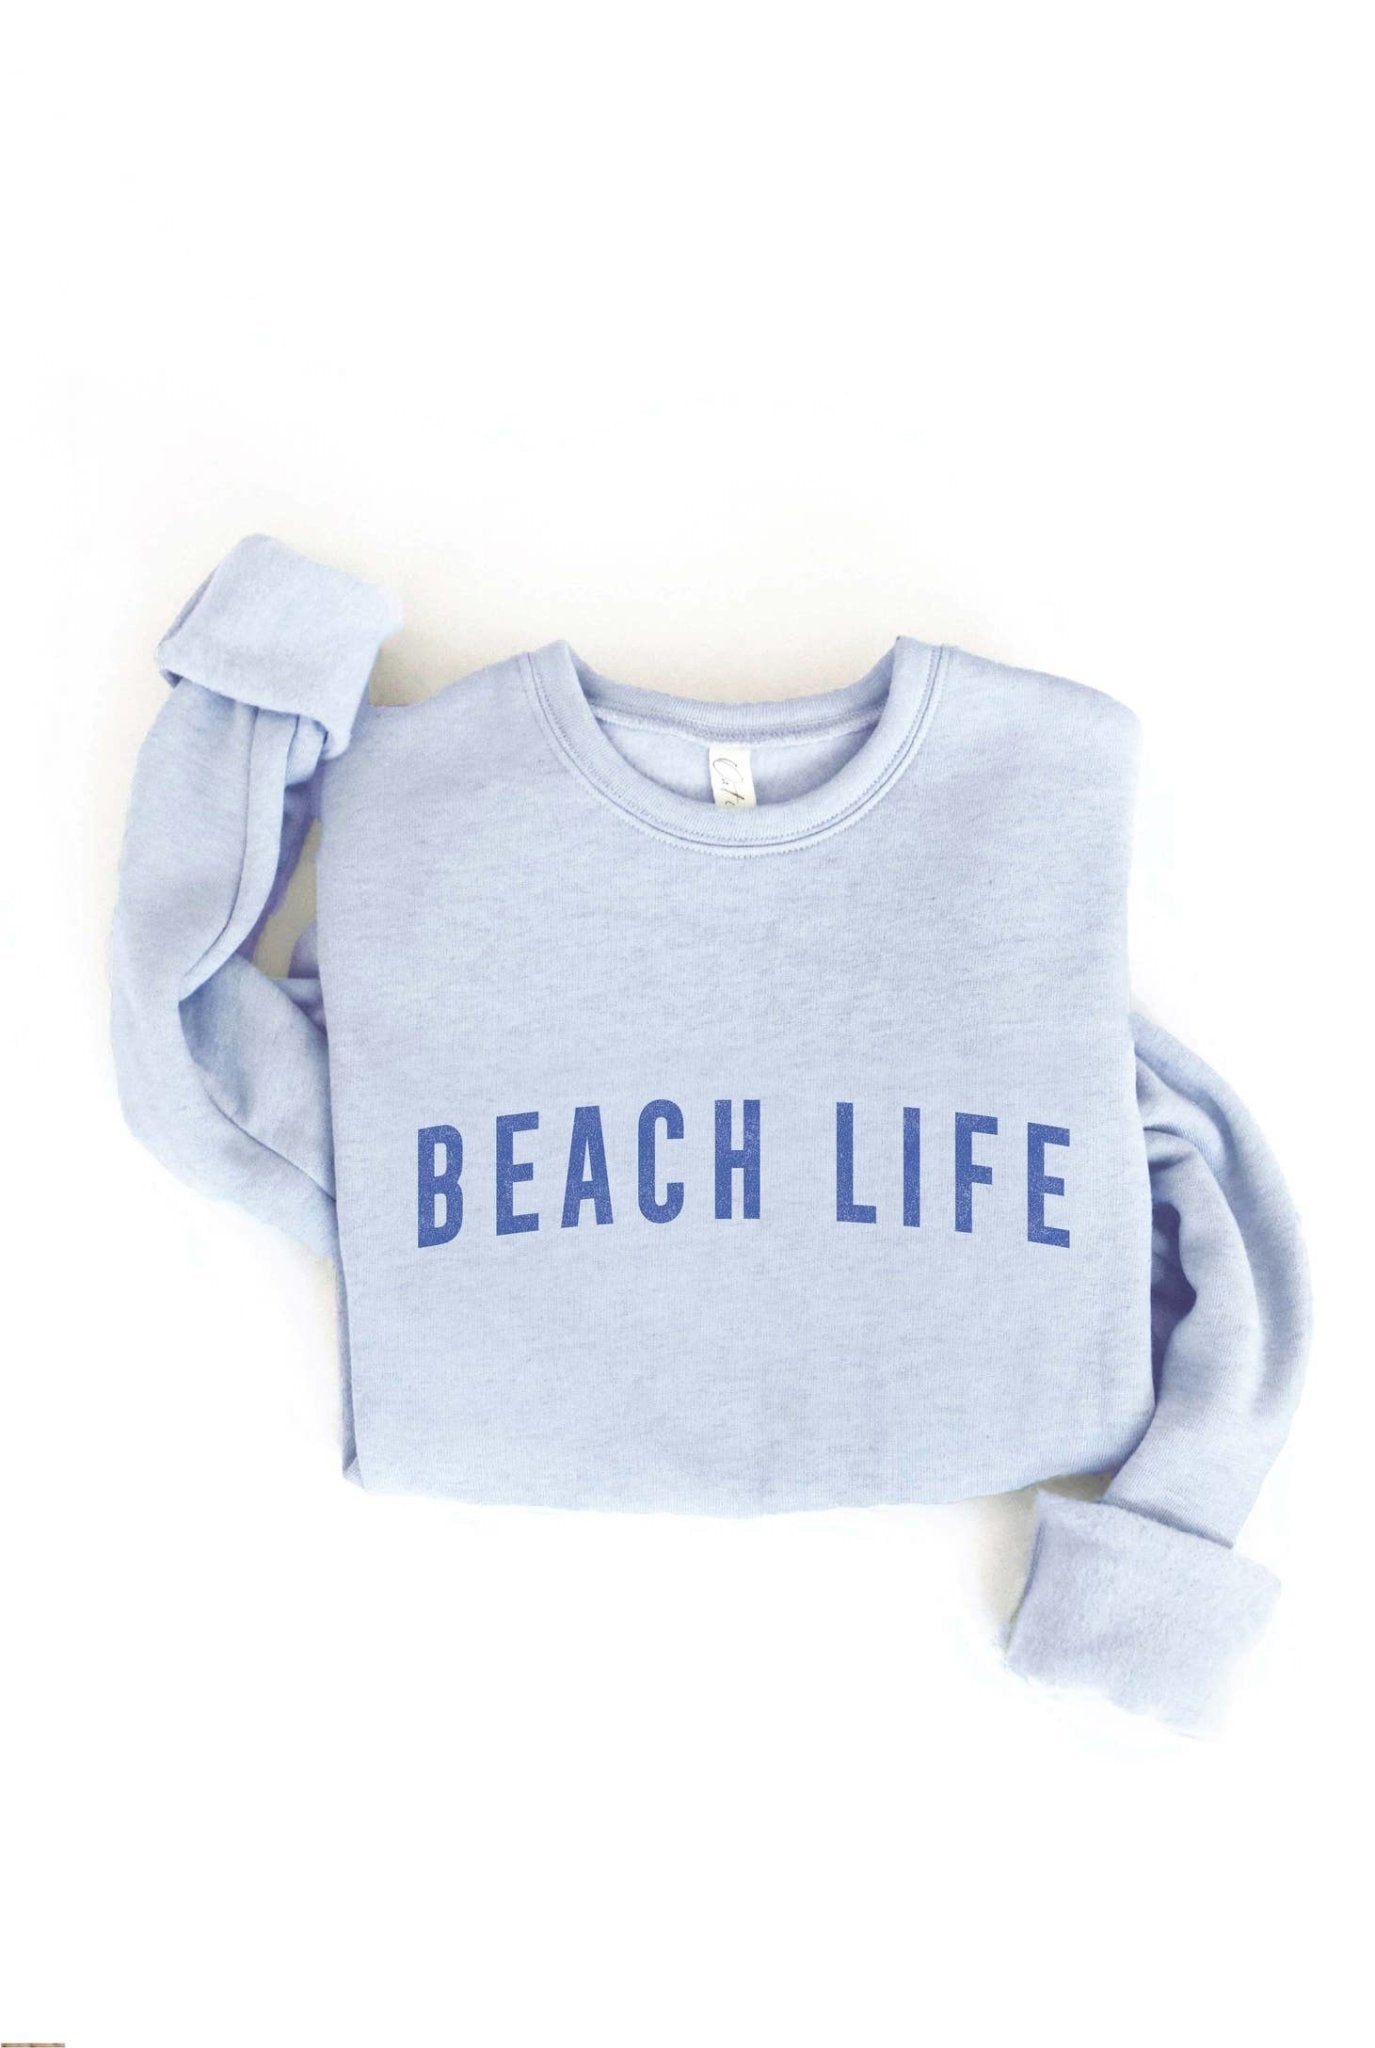 BEACH LIFE NG Sweatshirt - The Riviera Towel Company